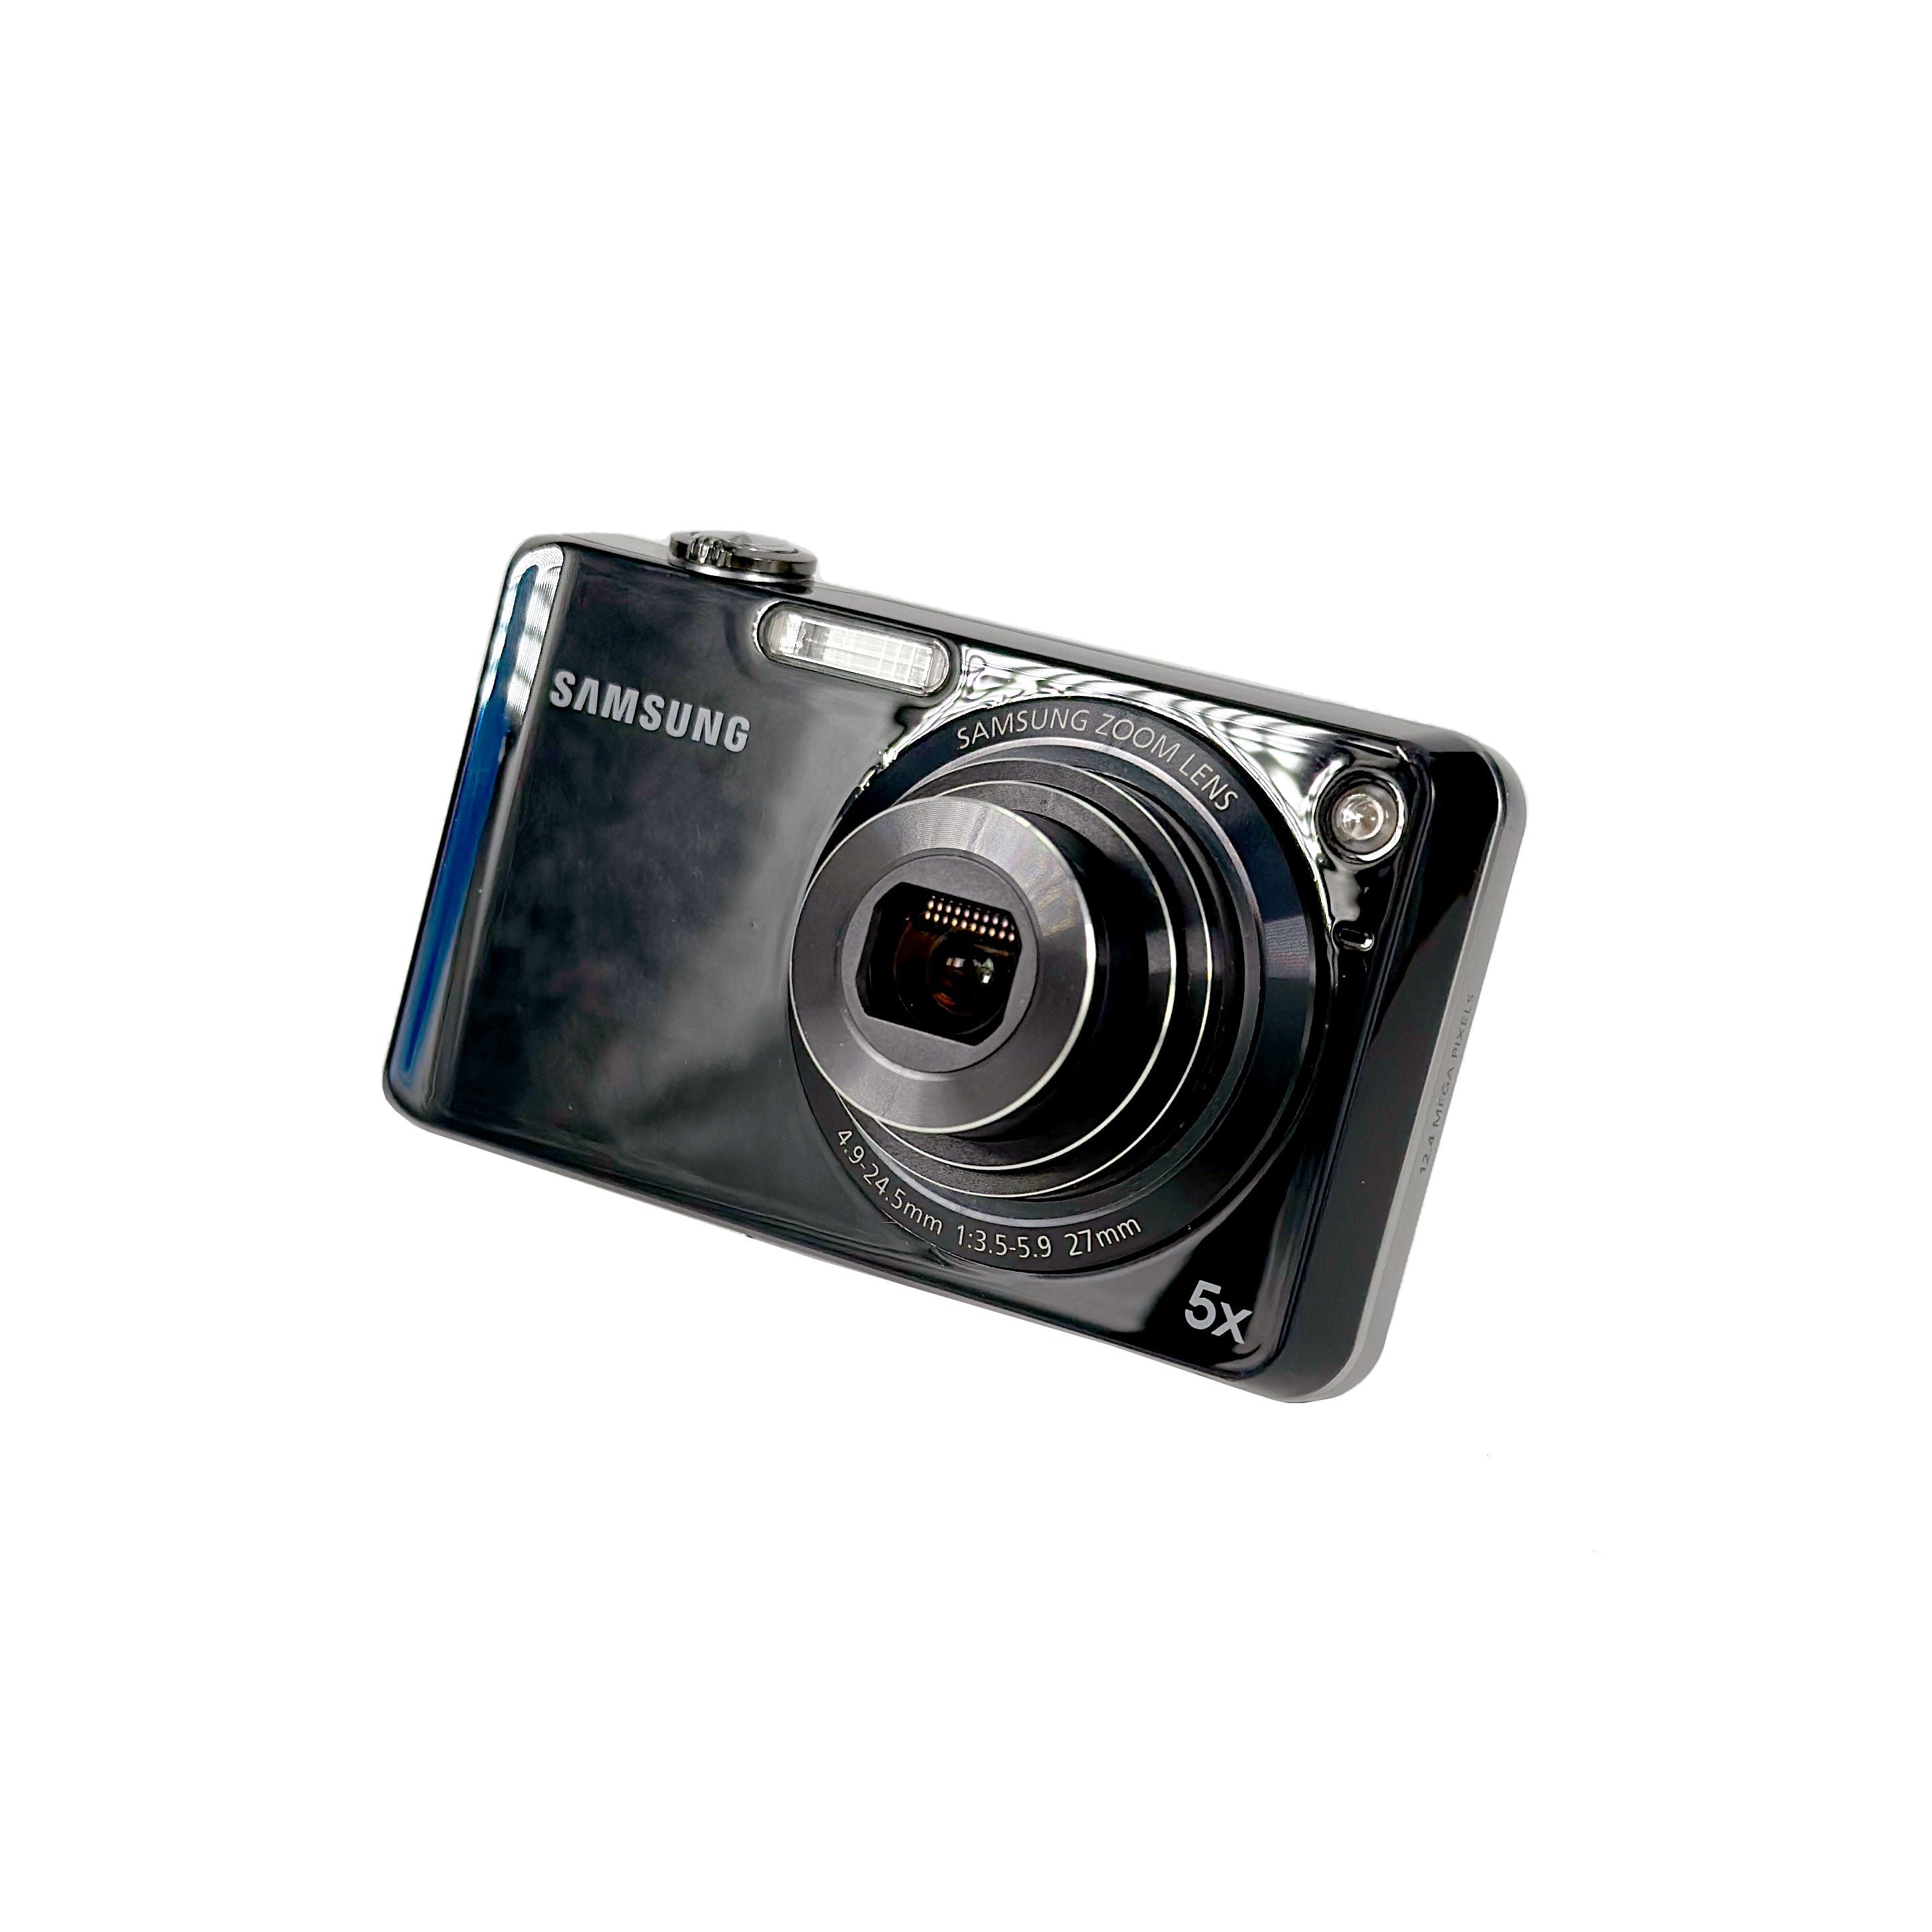 Samsung PL150 Digital Compact